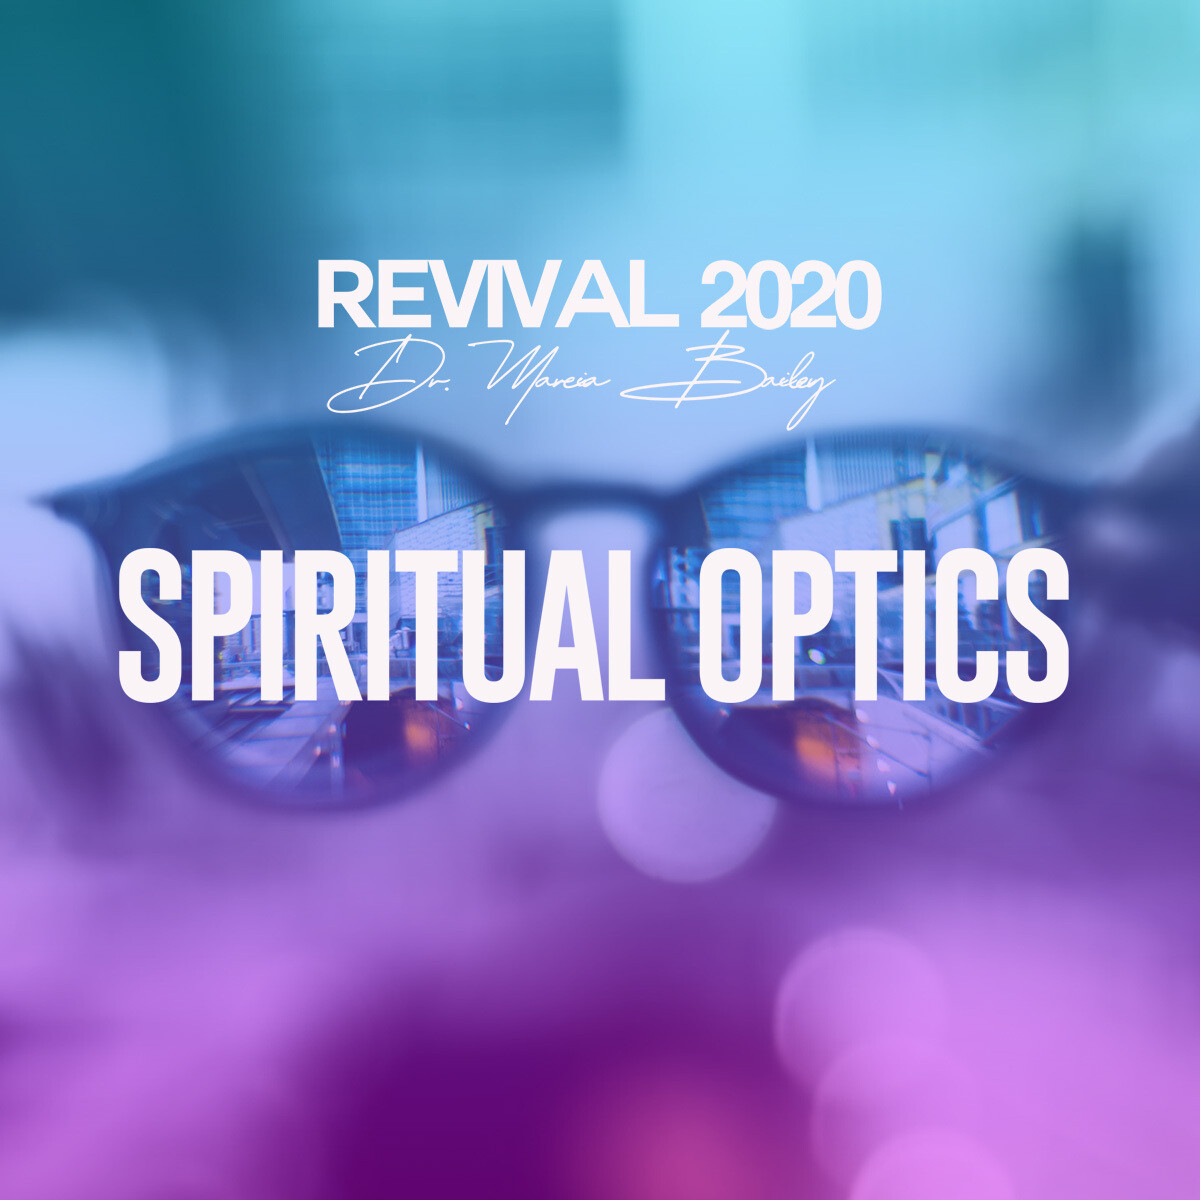 Spiritual Optics | Dr. Marcia Bailey | Revival 2020